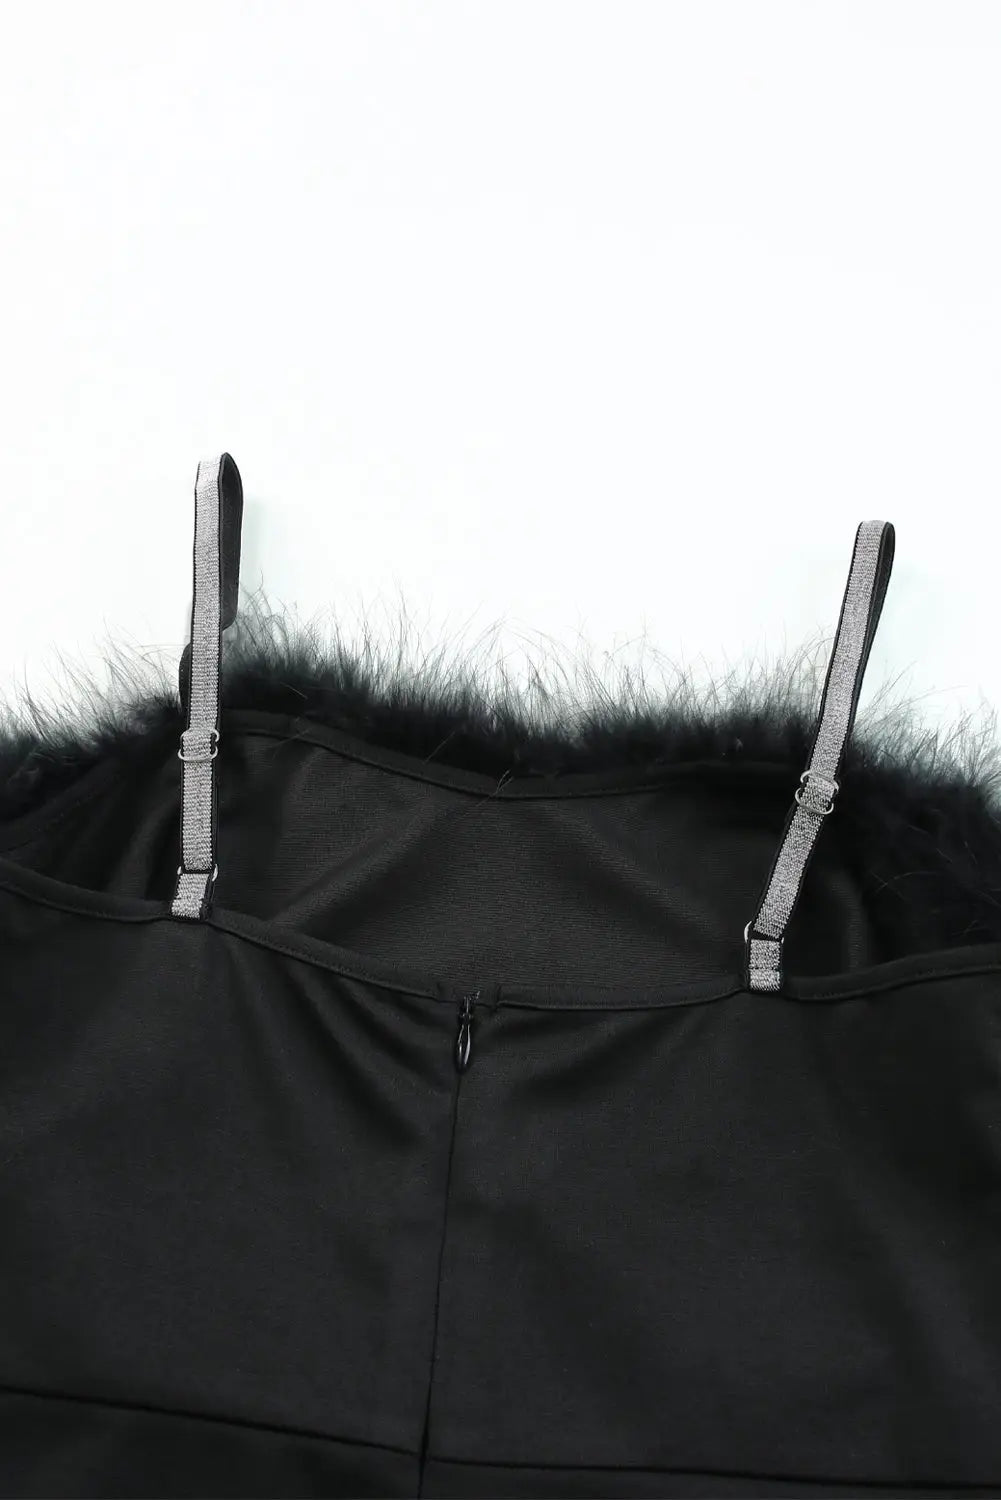 Black rhinestone straps feather trim bodycon midi dress with slit - dresses